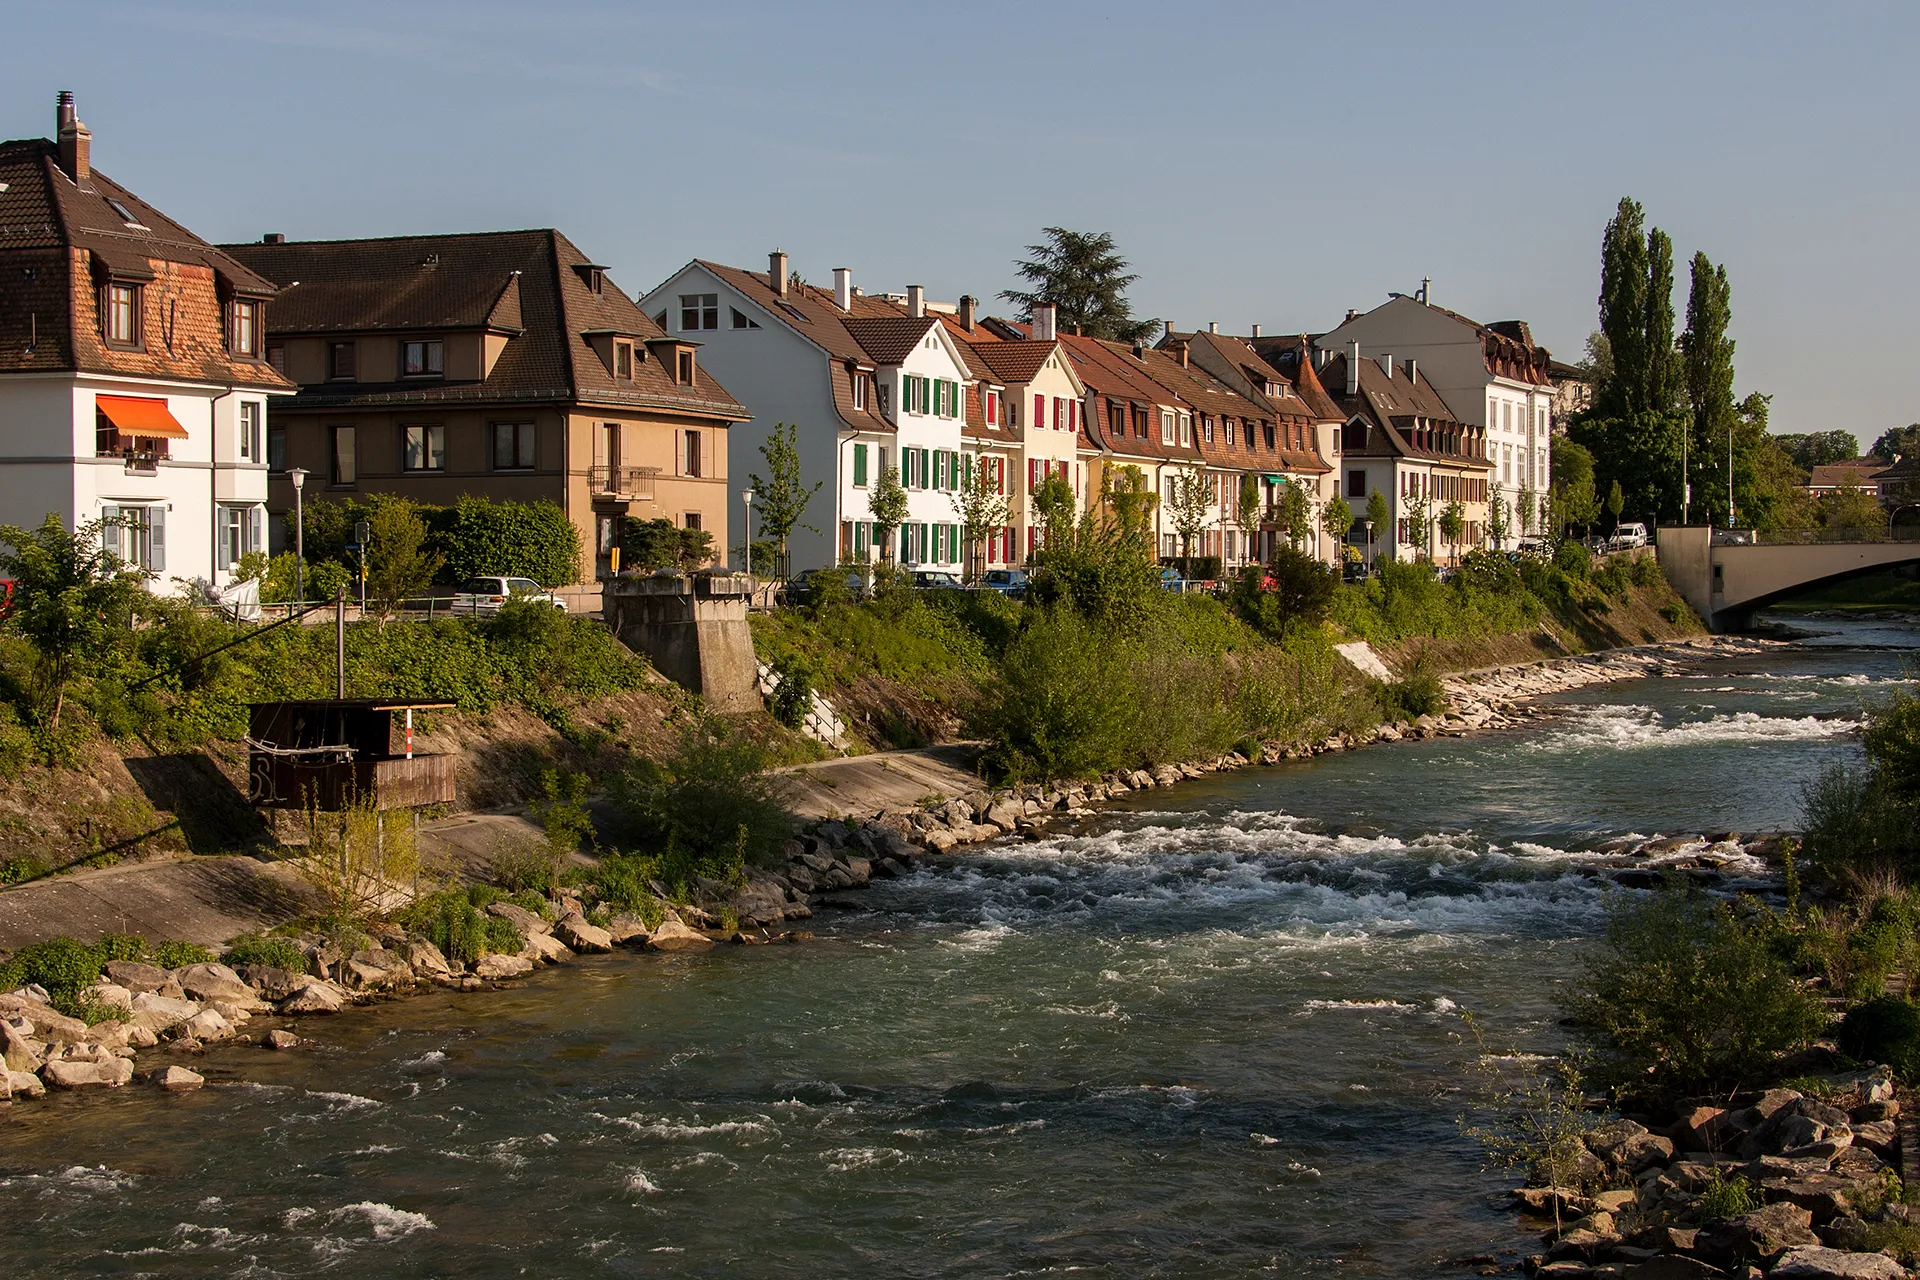 Image of Nordwestschweiz